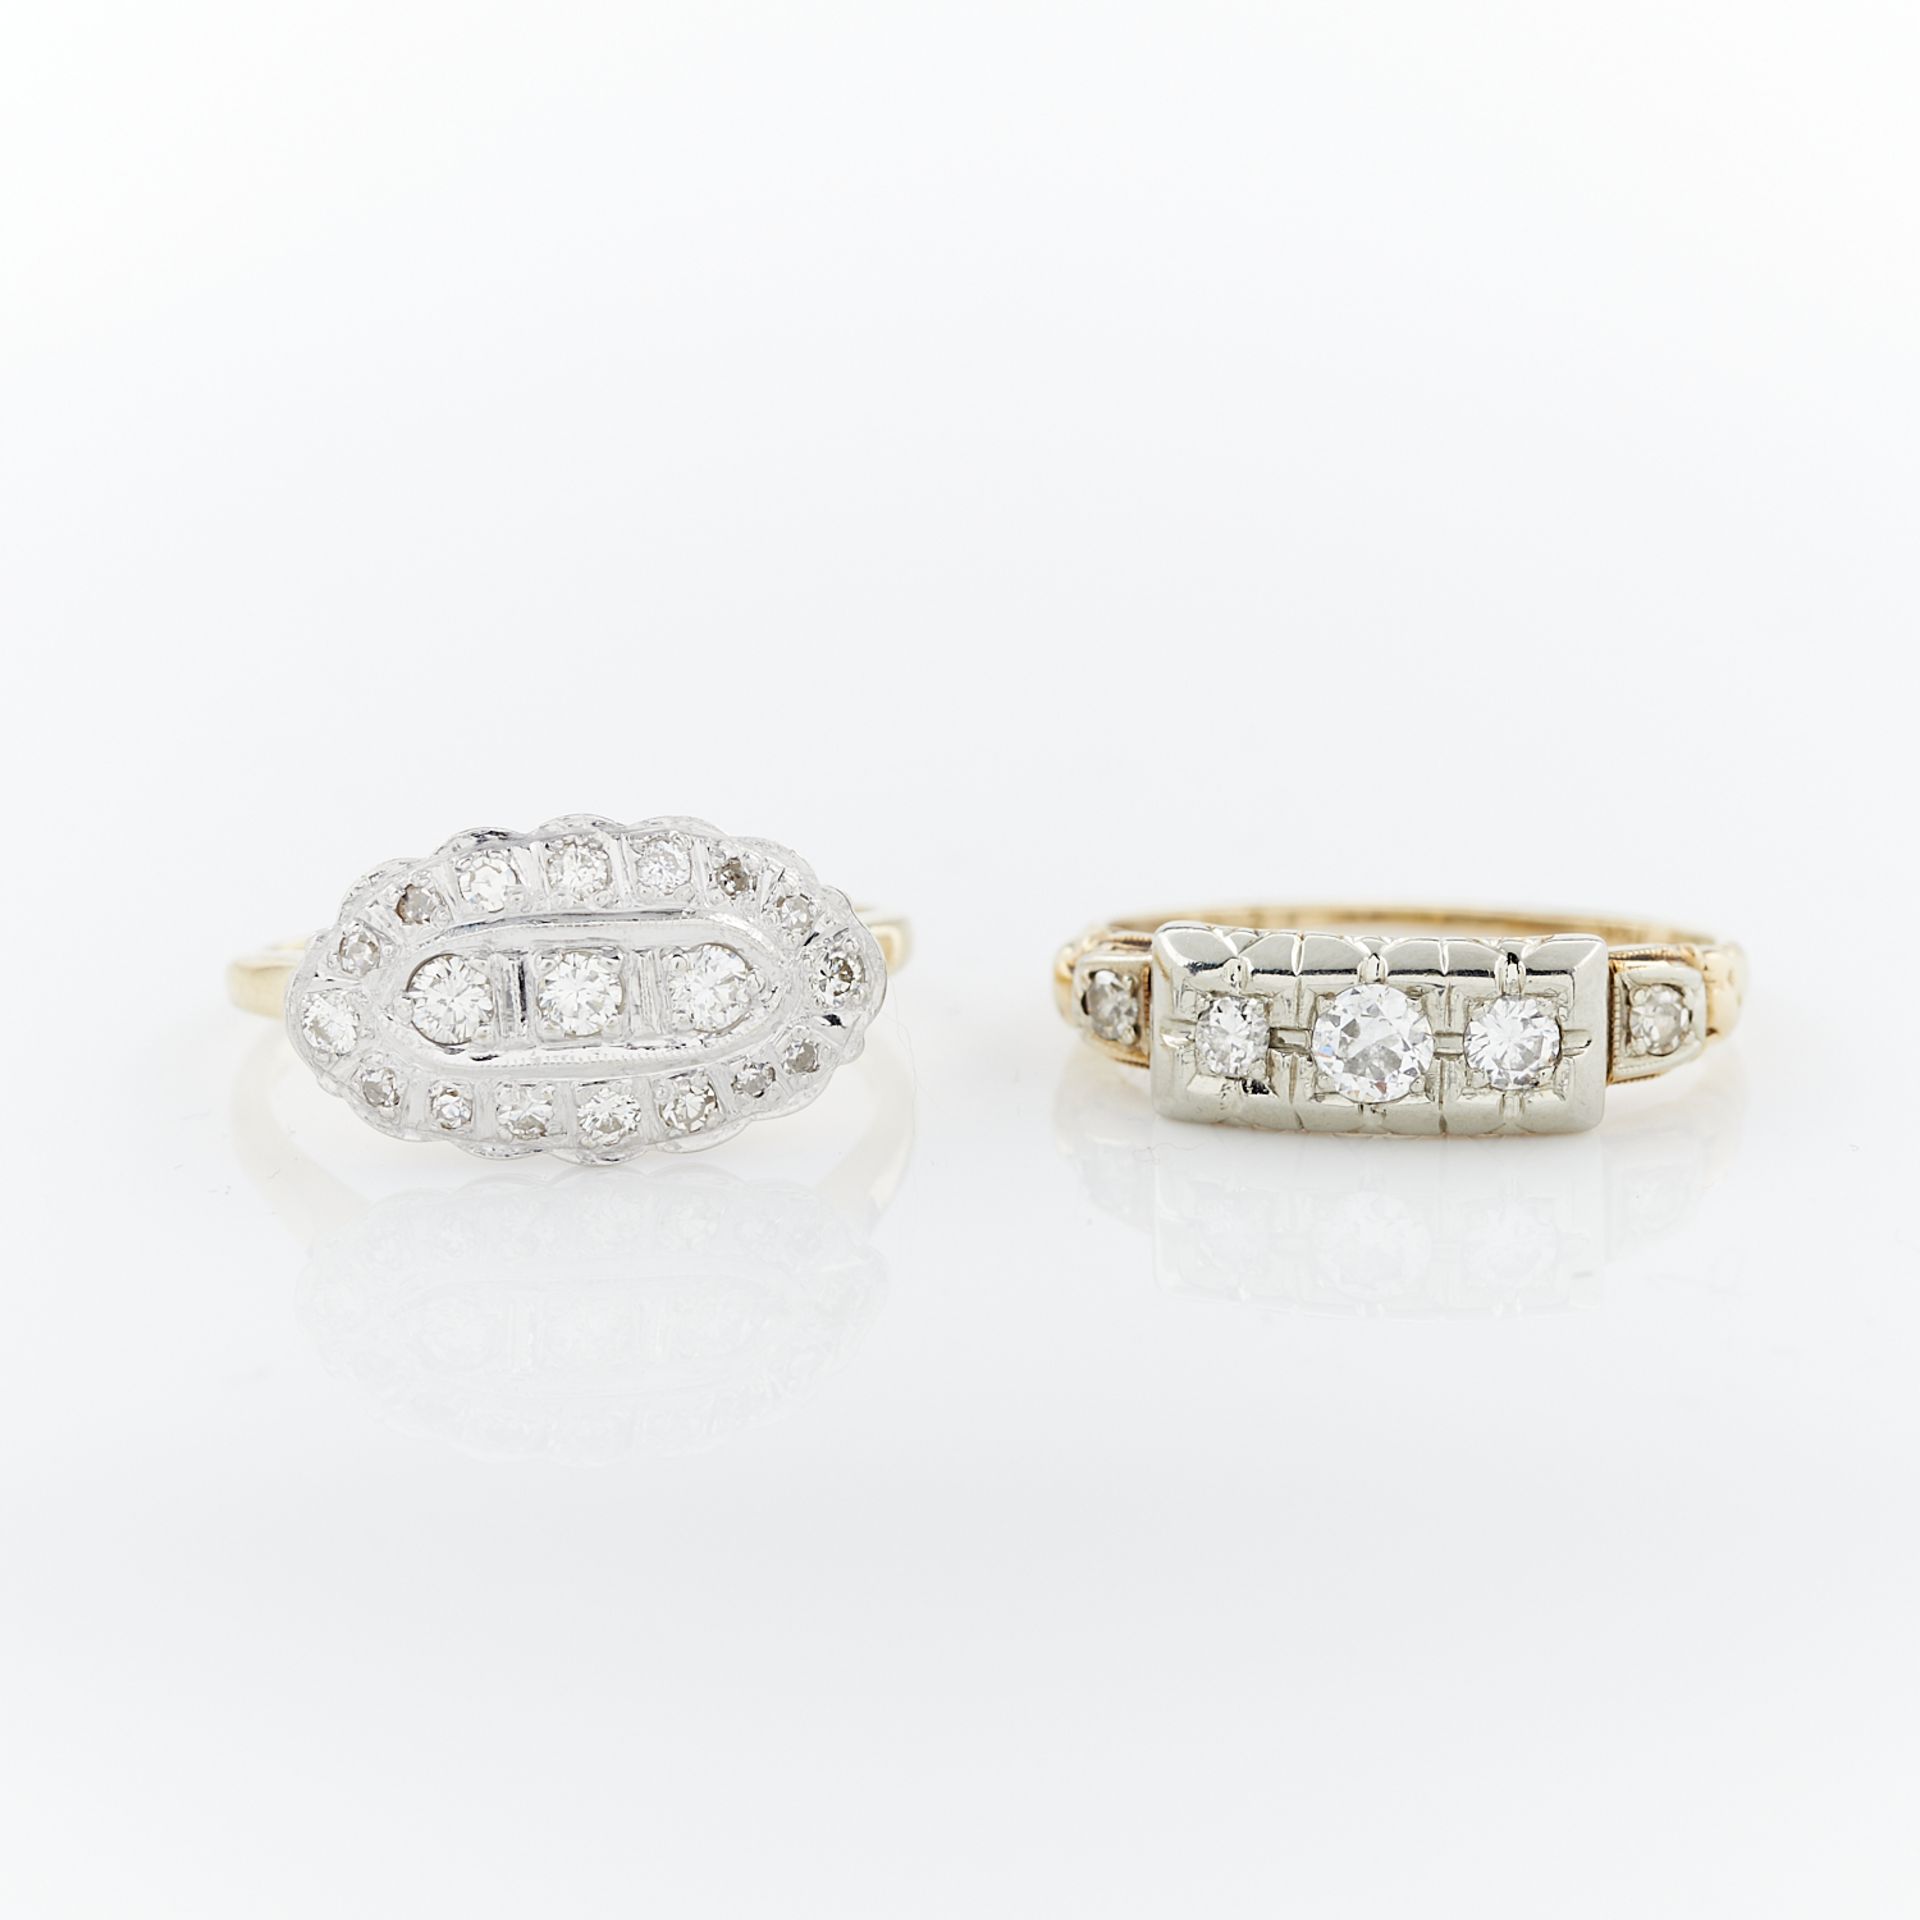 2 14k Gold Art Deco Style Diamond Rings - Image 6 of 17